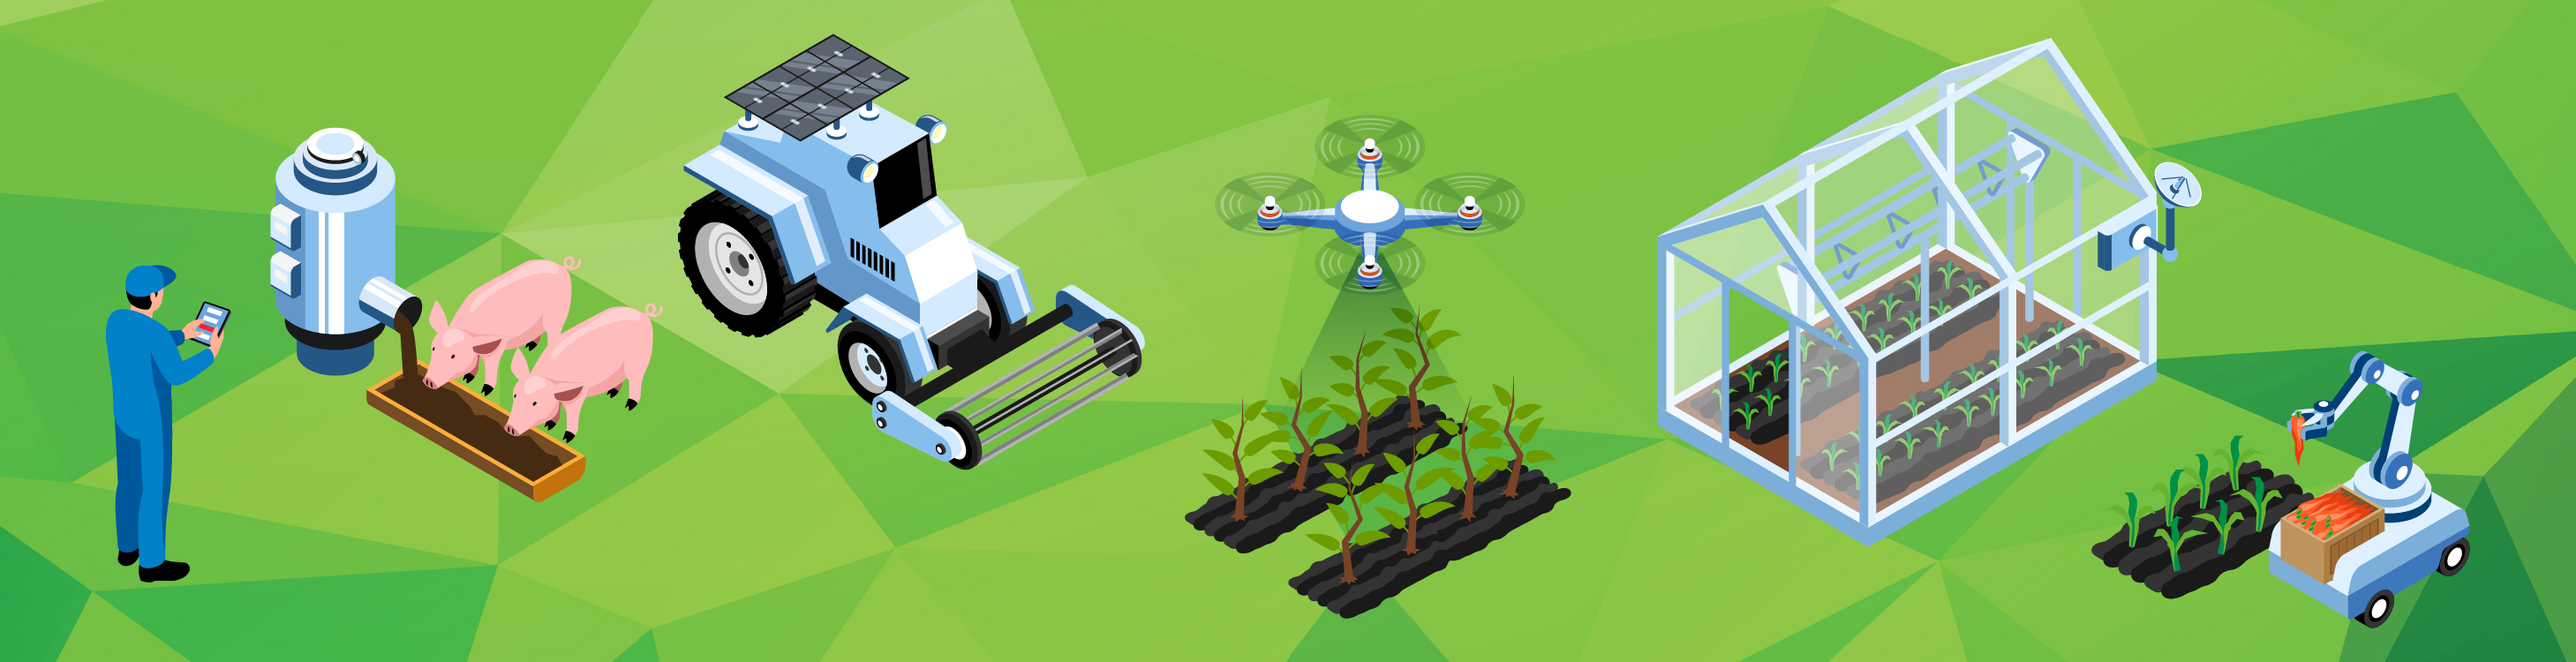 Smart Farming Technology Solutions from OKdo